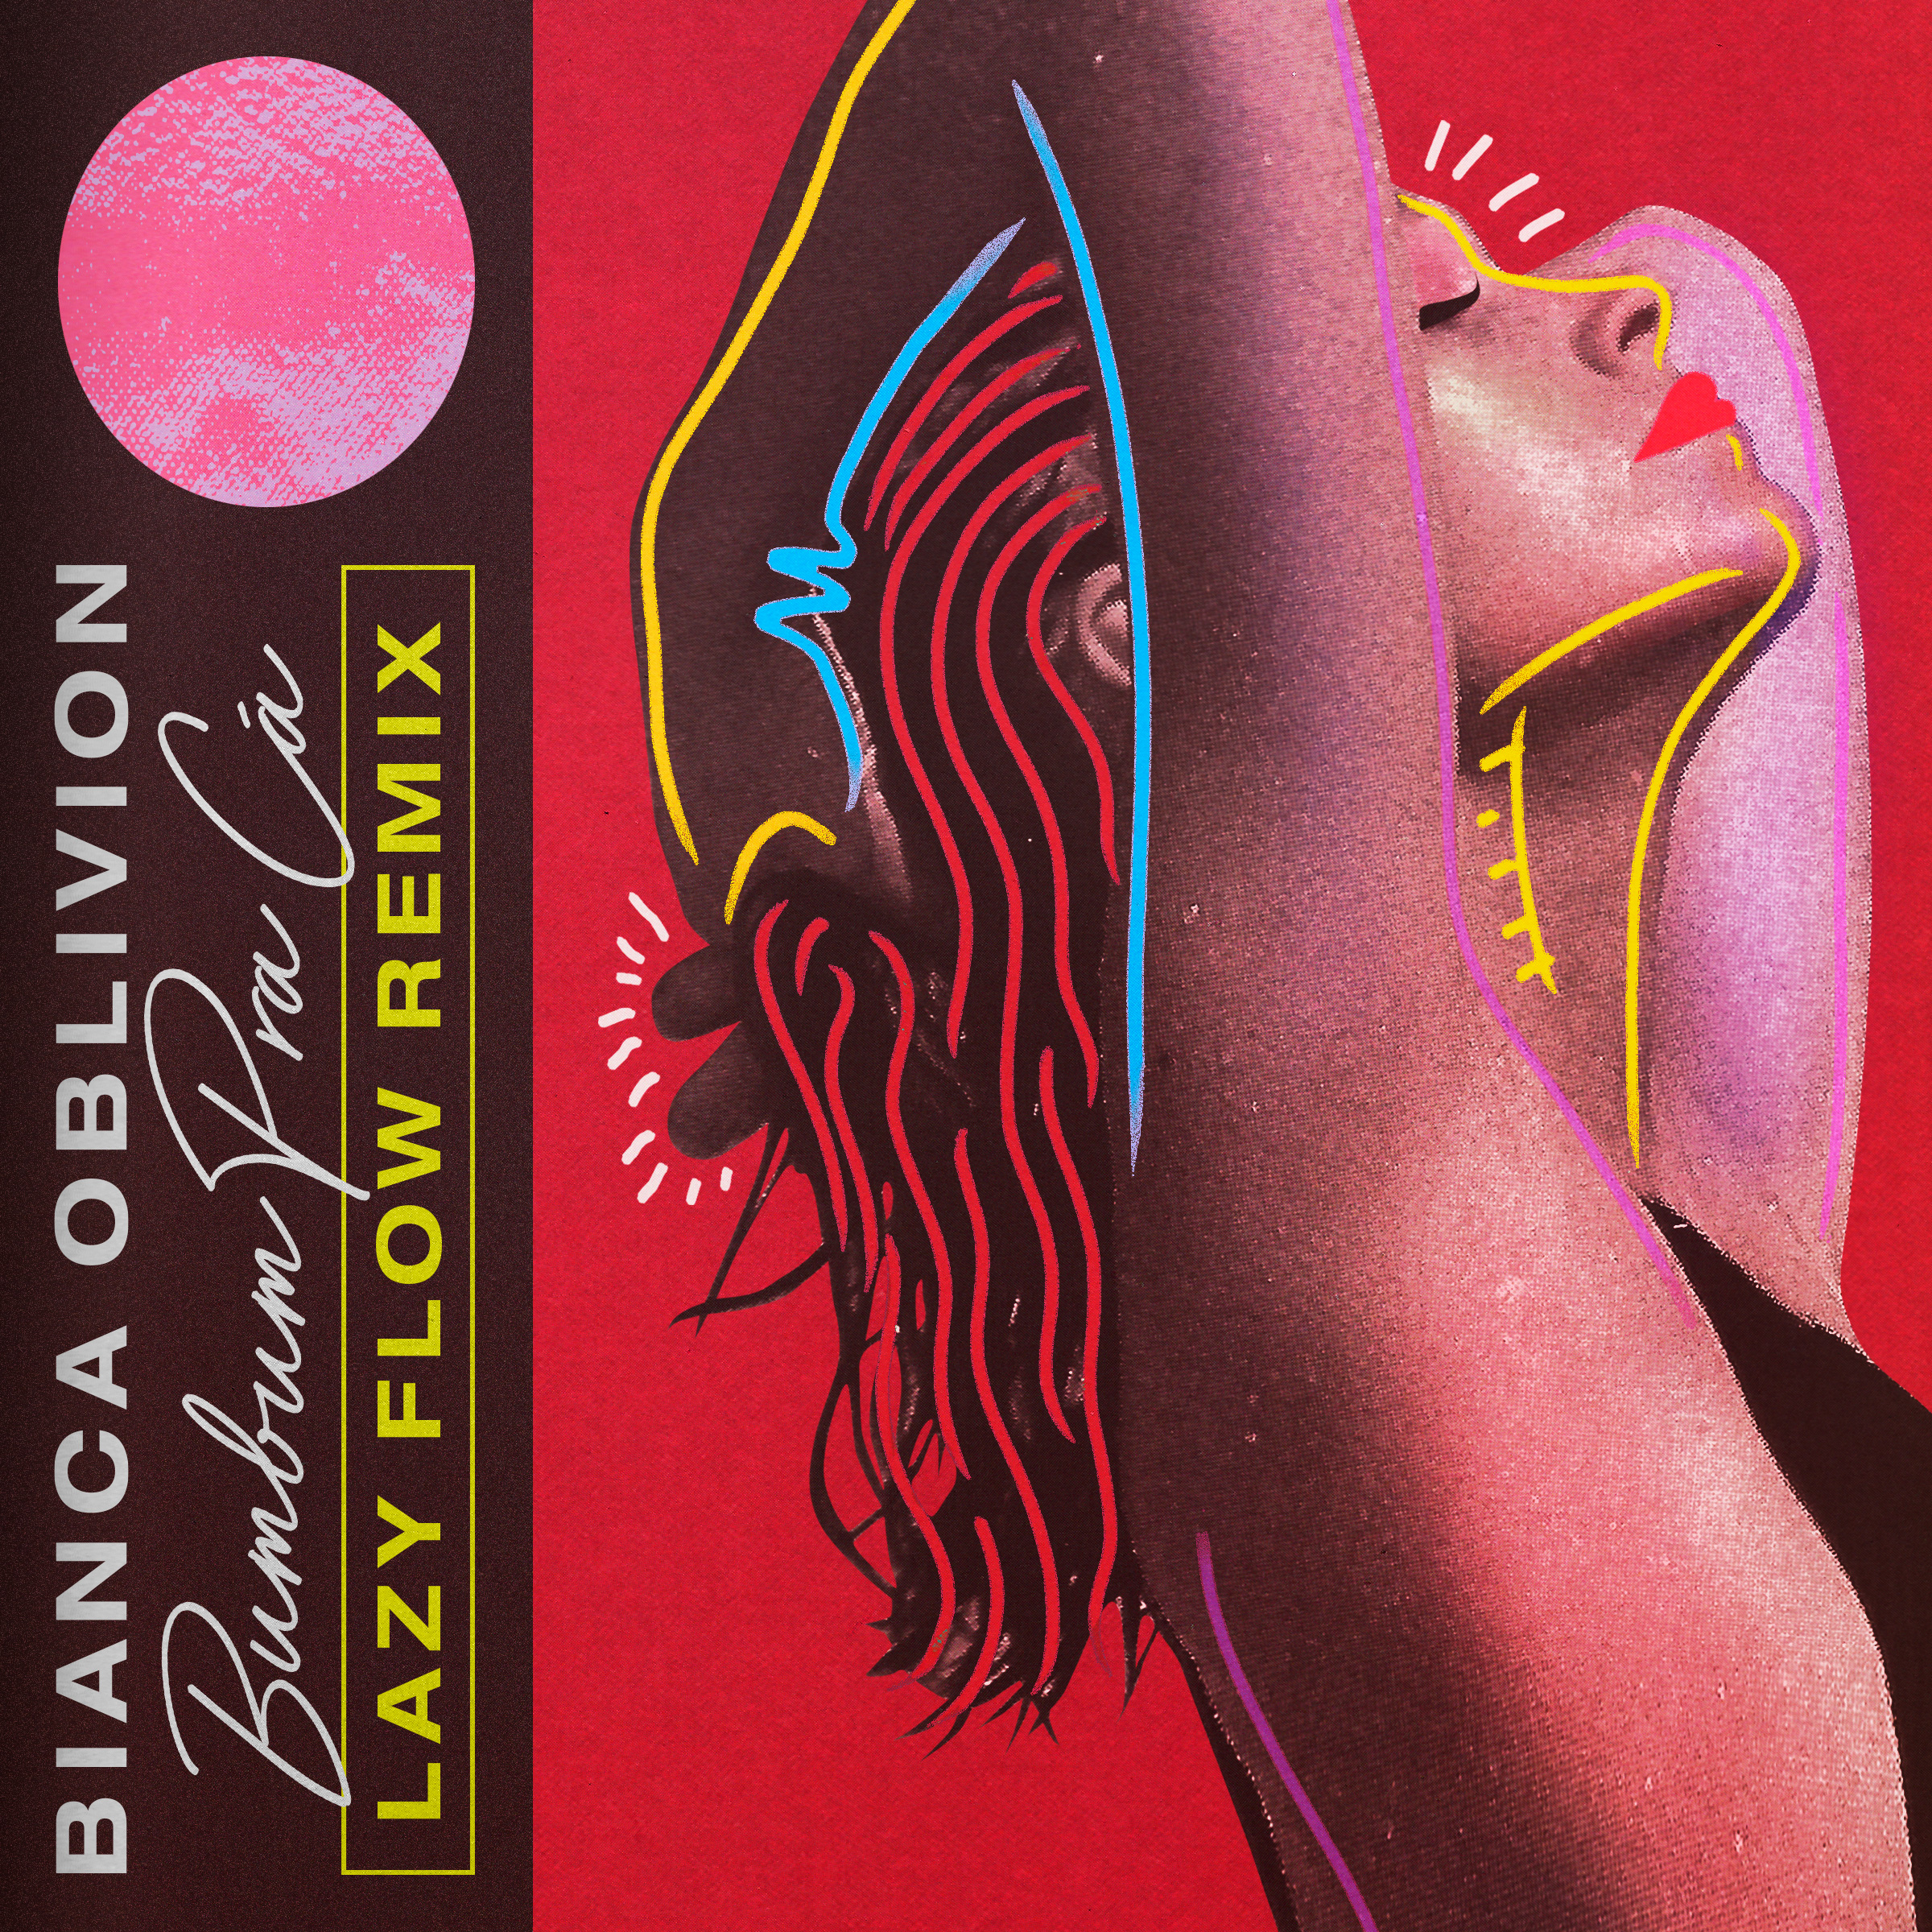 Lae alla [PREMIERE] Bianca Oblivion - Bumbum Pra Cá (Lazy Flow remix)